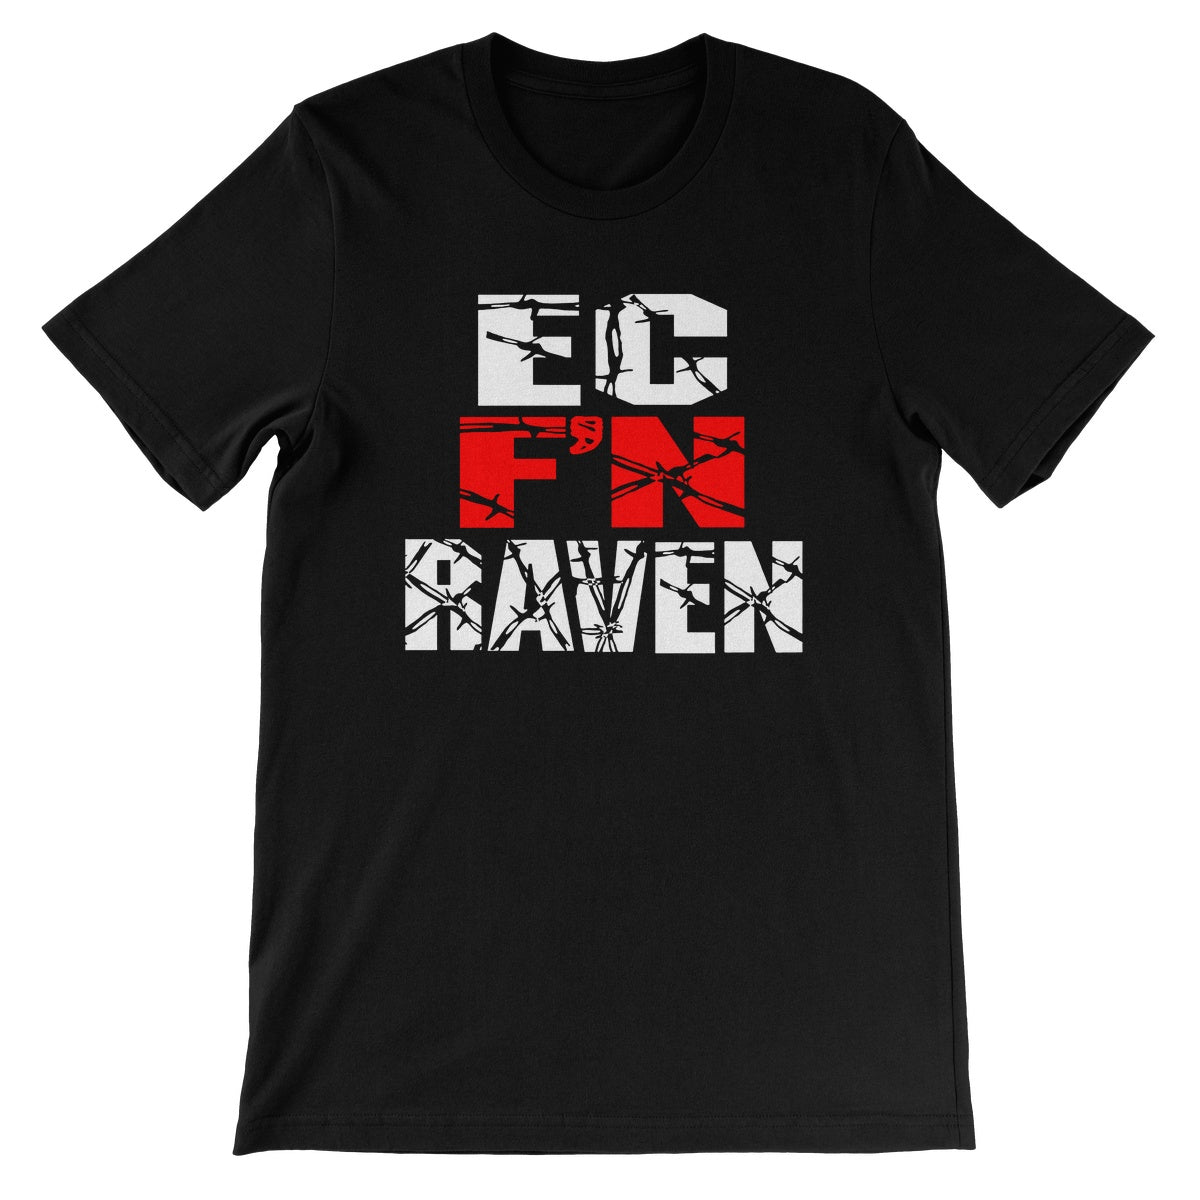 Raven EC F'N Raven Unisex Short Sleeve T-Shirt